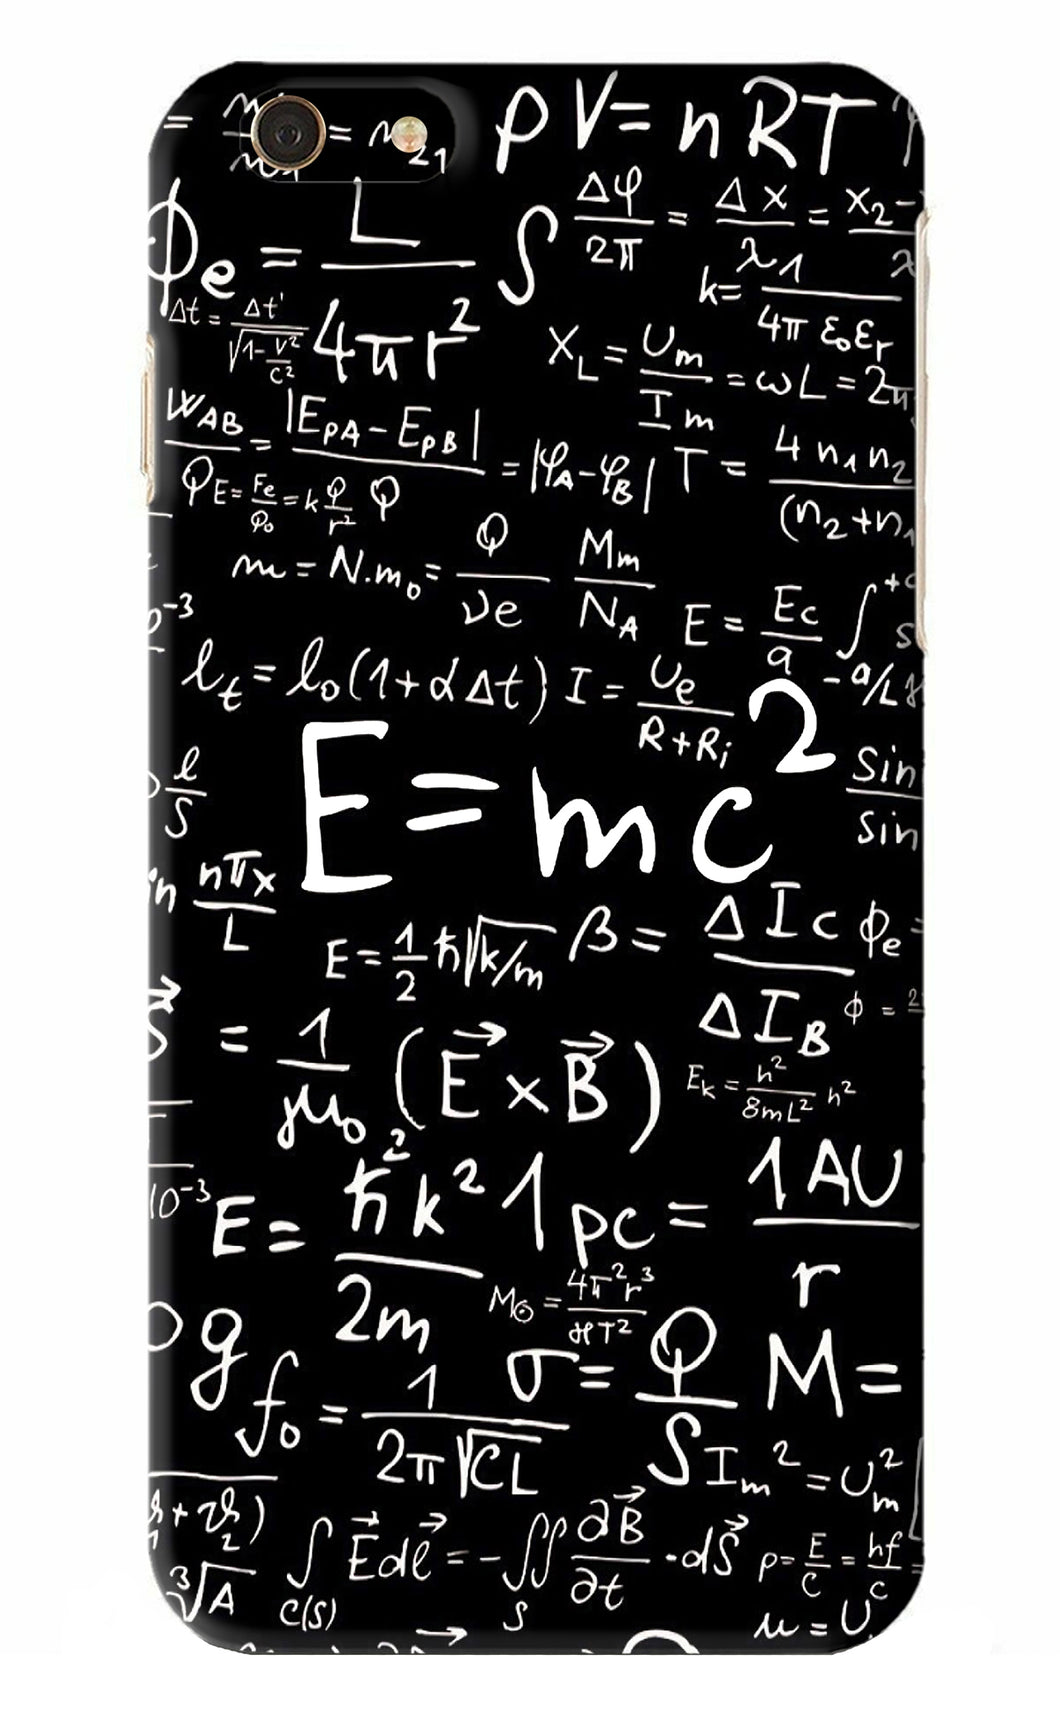 Physics Albert Einstein Formula iPhone 6S Plus Back Skin Wrap